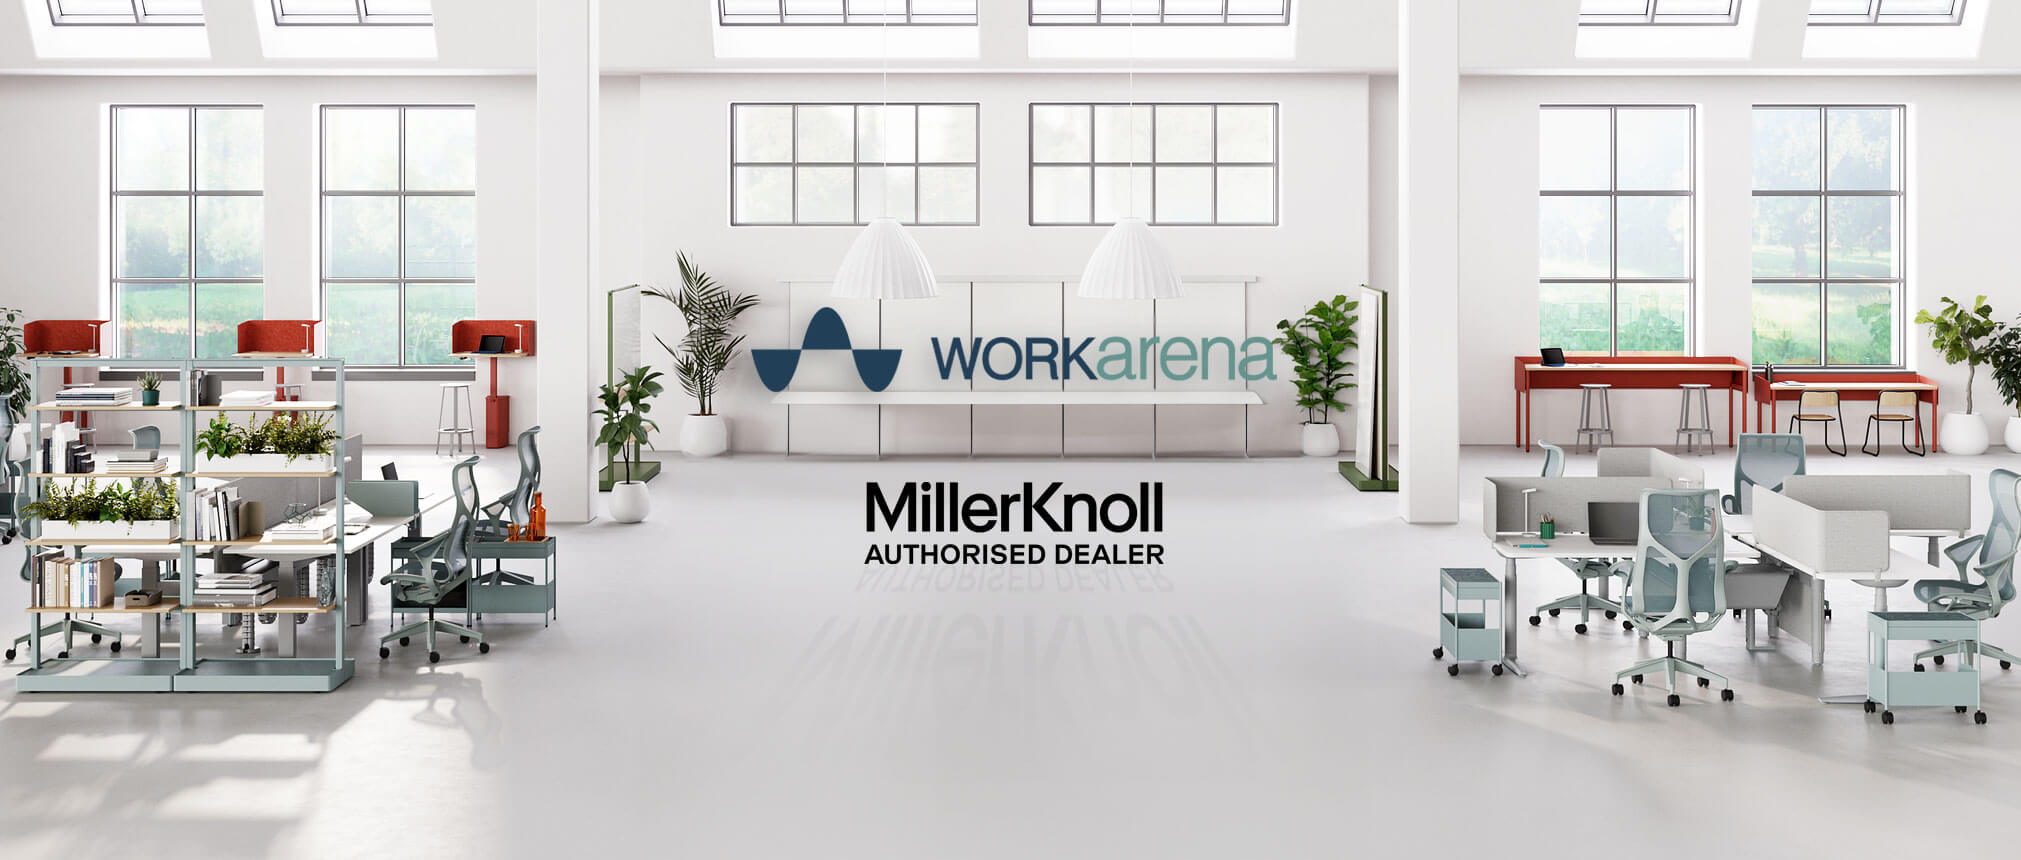 WorkArena Becomes a MillerKnoll Authorised Dealer